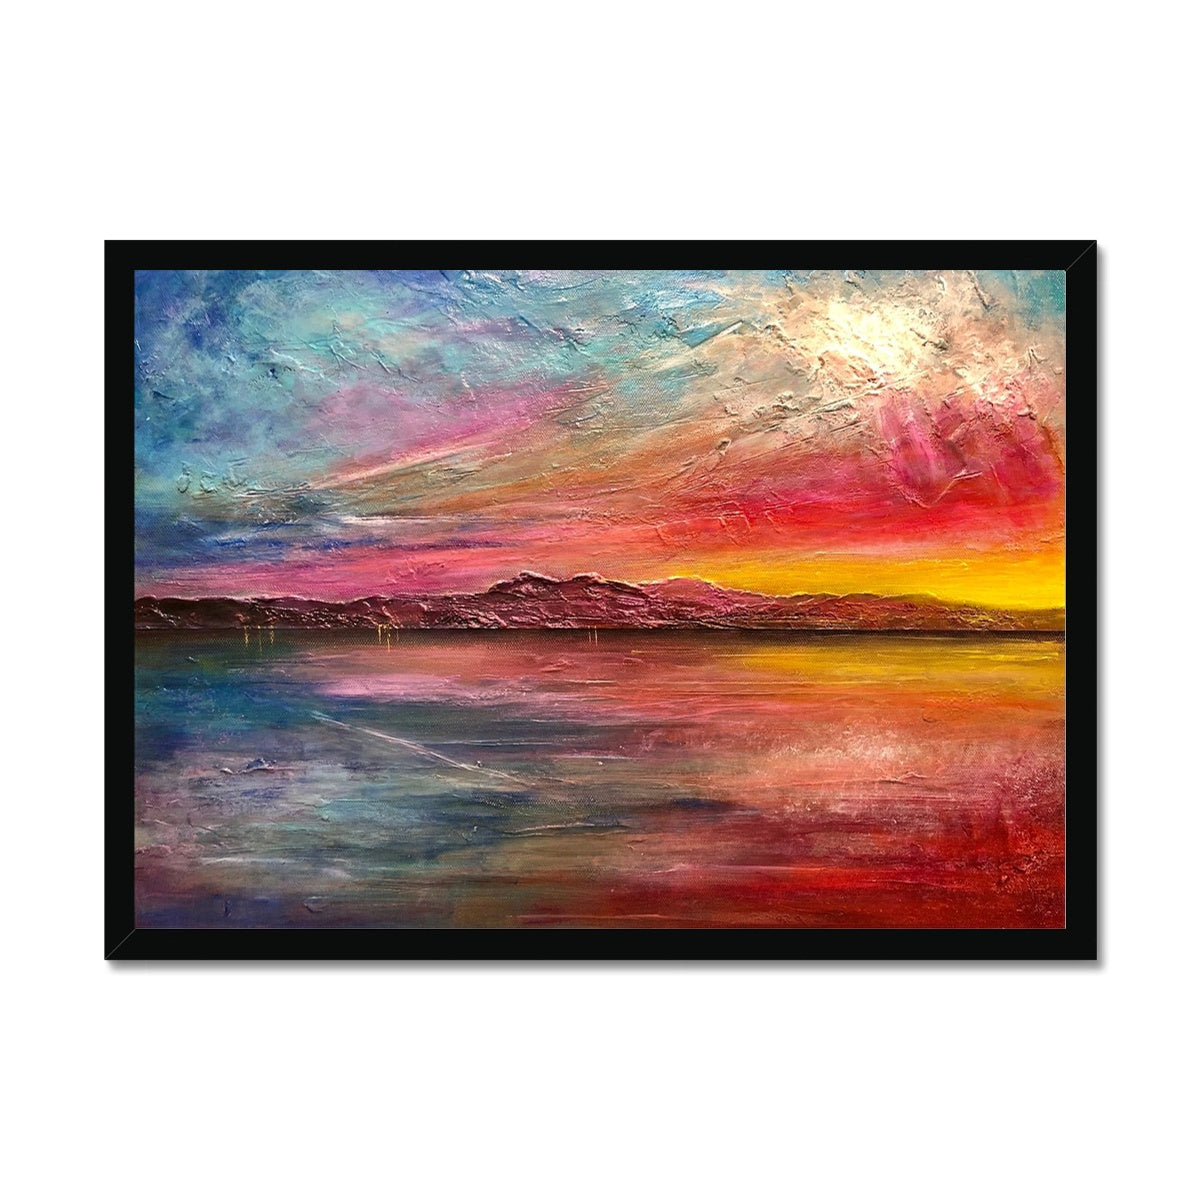 Arran Sunset ii Painting | Framed Prints From Scotland-Framed Prints-Arran Art Gallery-A2 Landscape-Black Frame-Paintings, Prints, Homeware, Art Gifts From Scotland By Scottish Artist Kevin Hunter